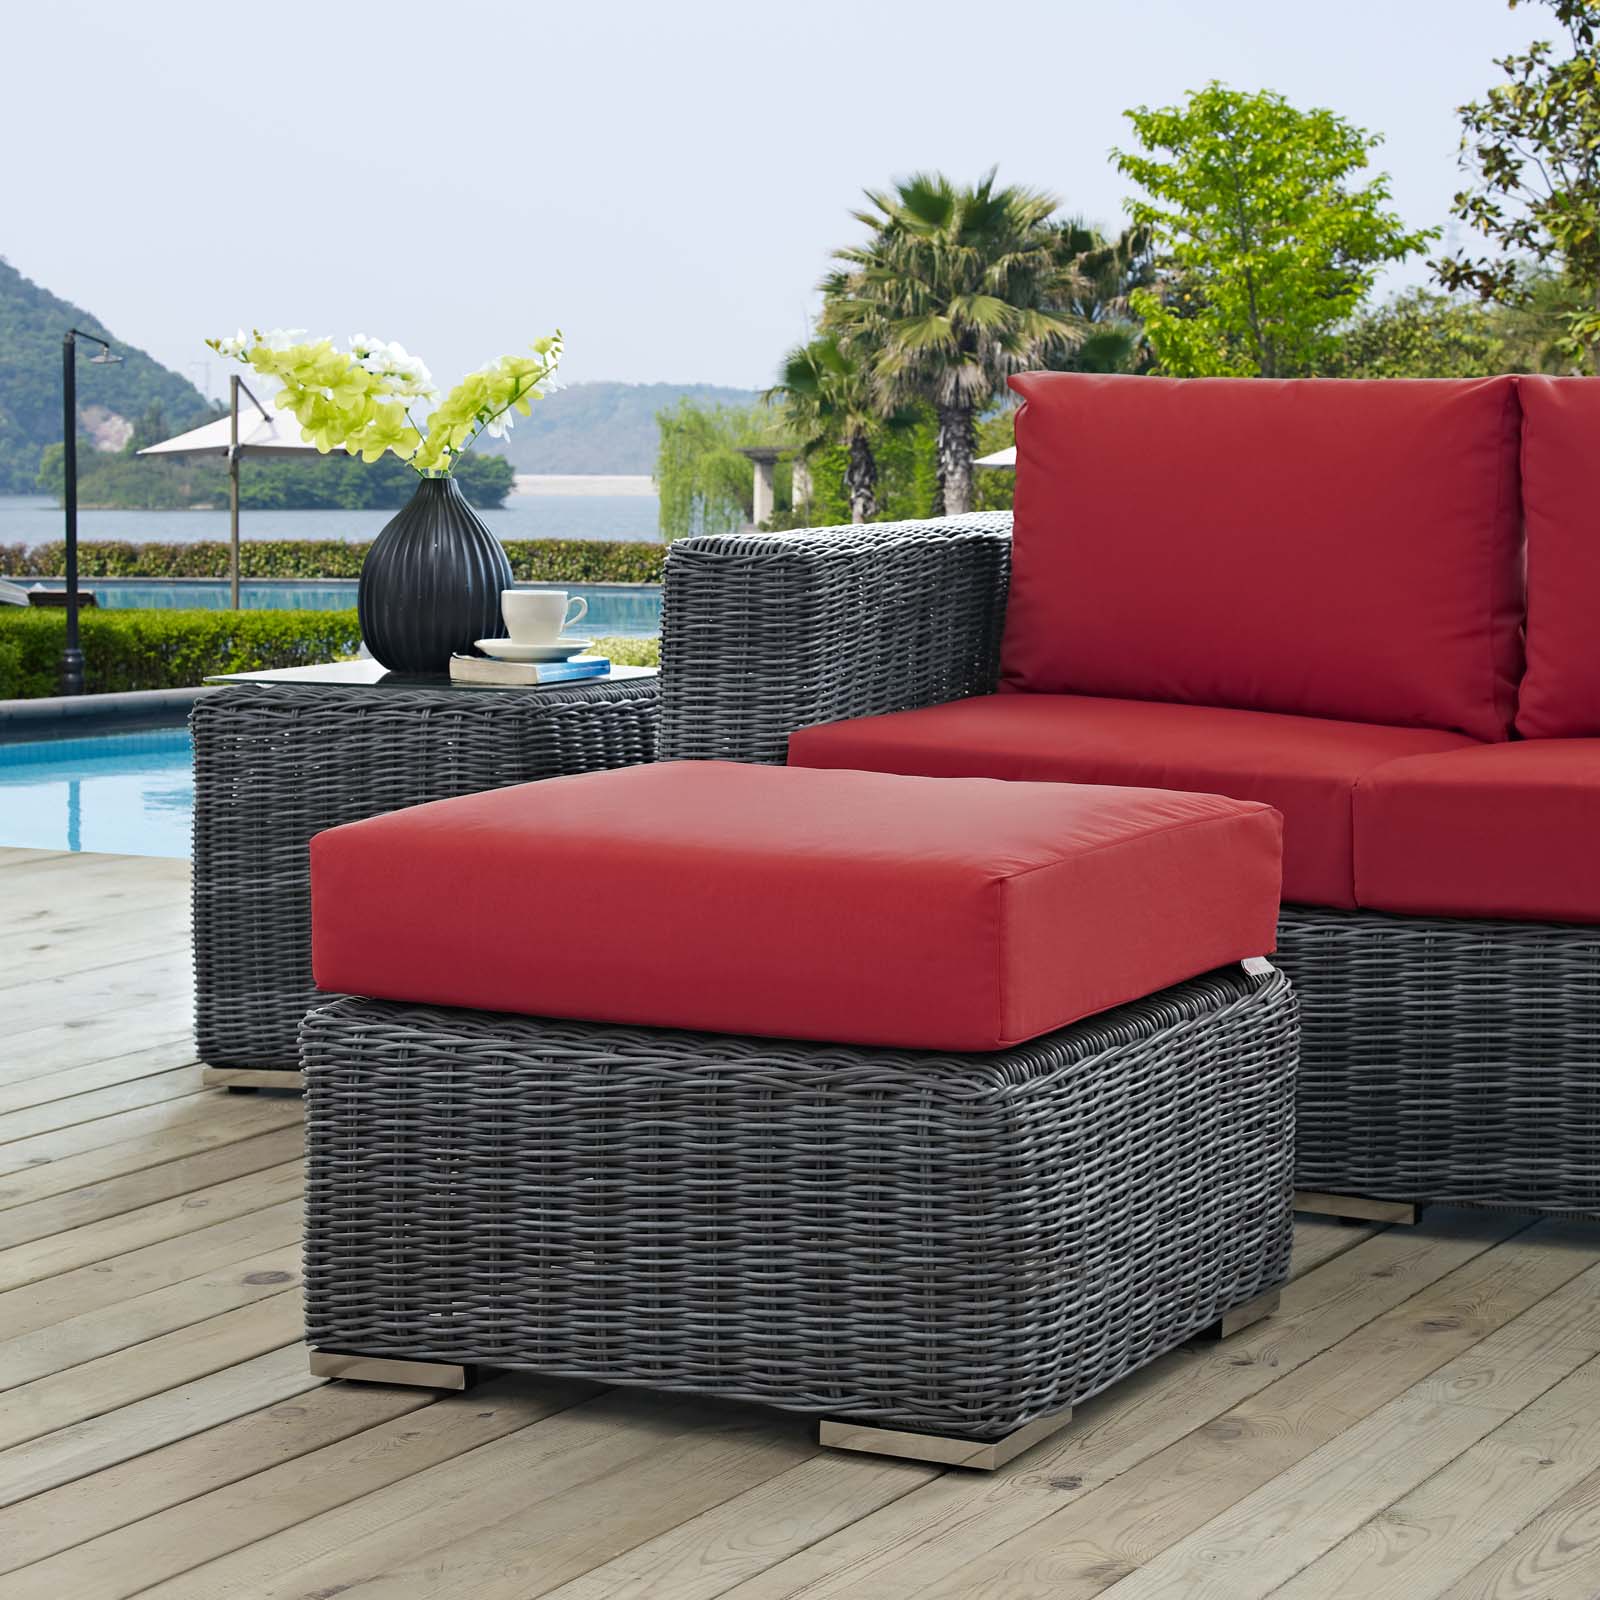 Modern Contemporary Urban Design Outdoor Patio Balcony Garden Furniture Lounge Chair Ottoman, Sunbrella Rattan Wicker, Red - image 2 of 3